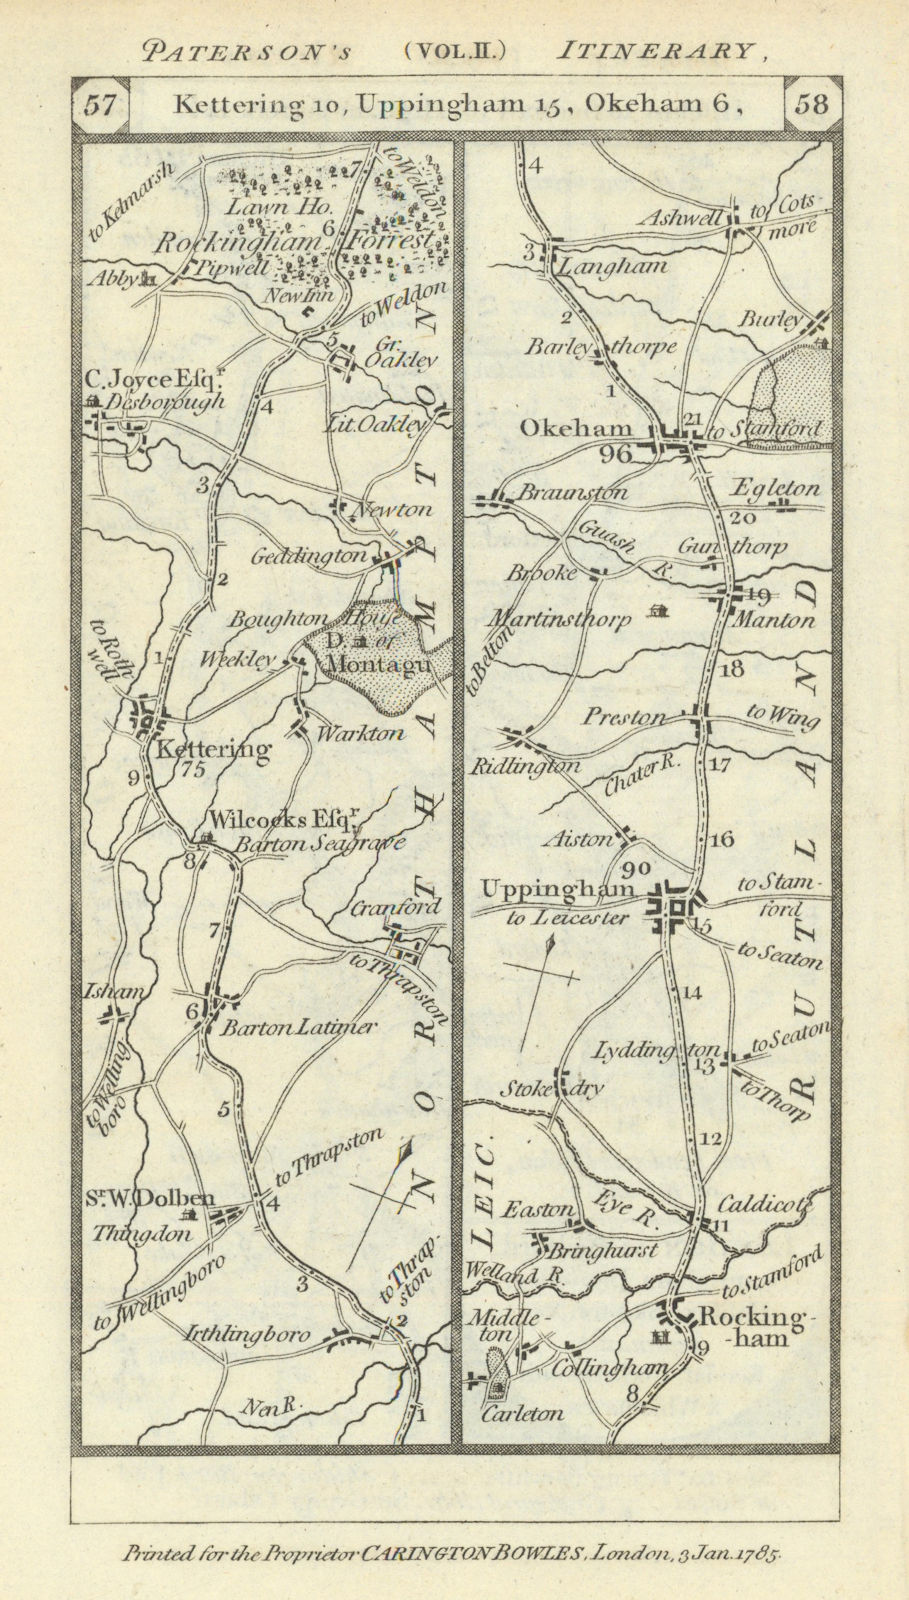 Kettering - Rockingham - Uppingham - Oakham road strip map PATERSON 1785